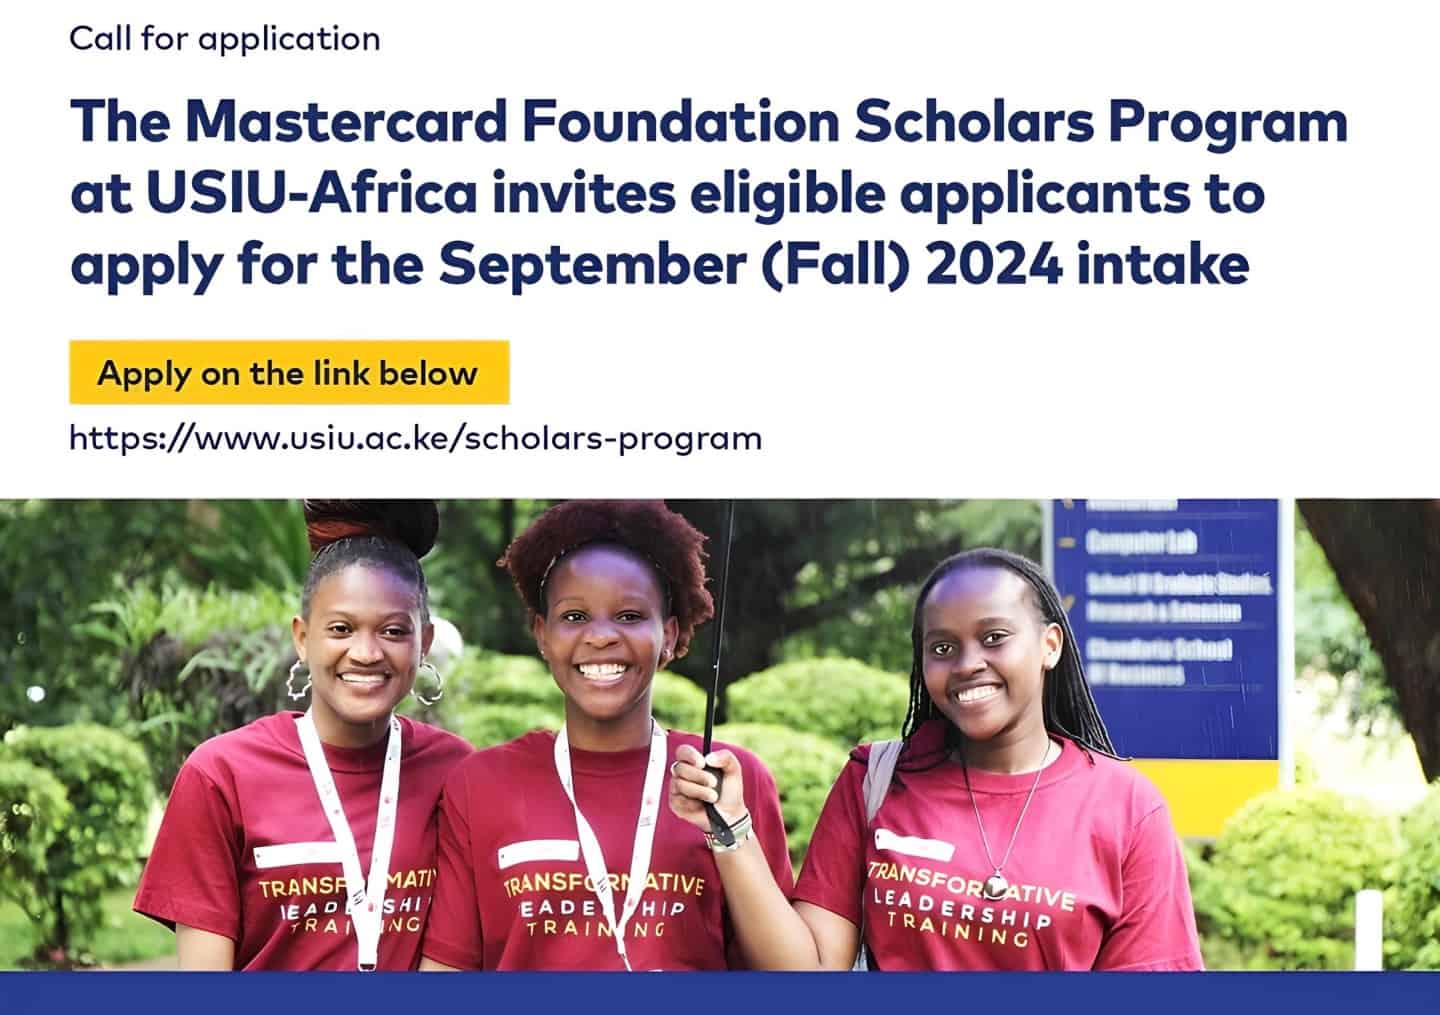 Mastercard Foundation Scholars Program at USIU-Africa